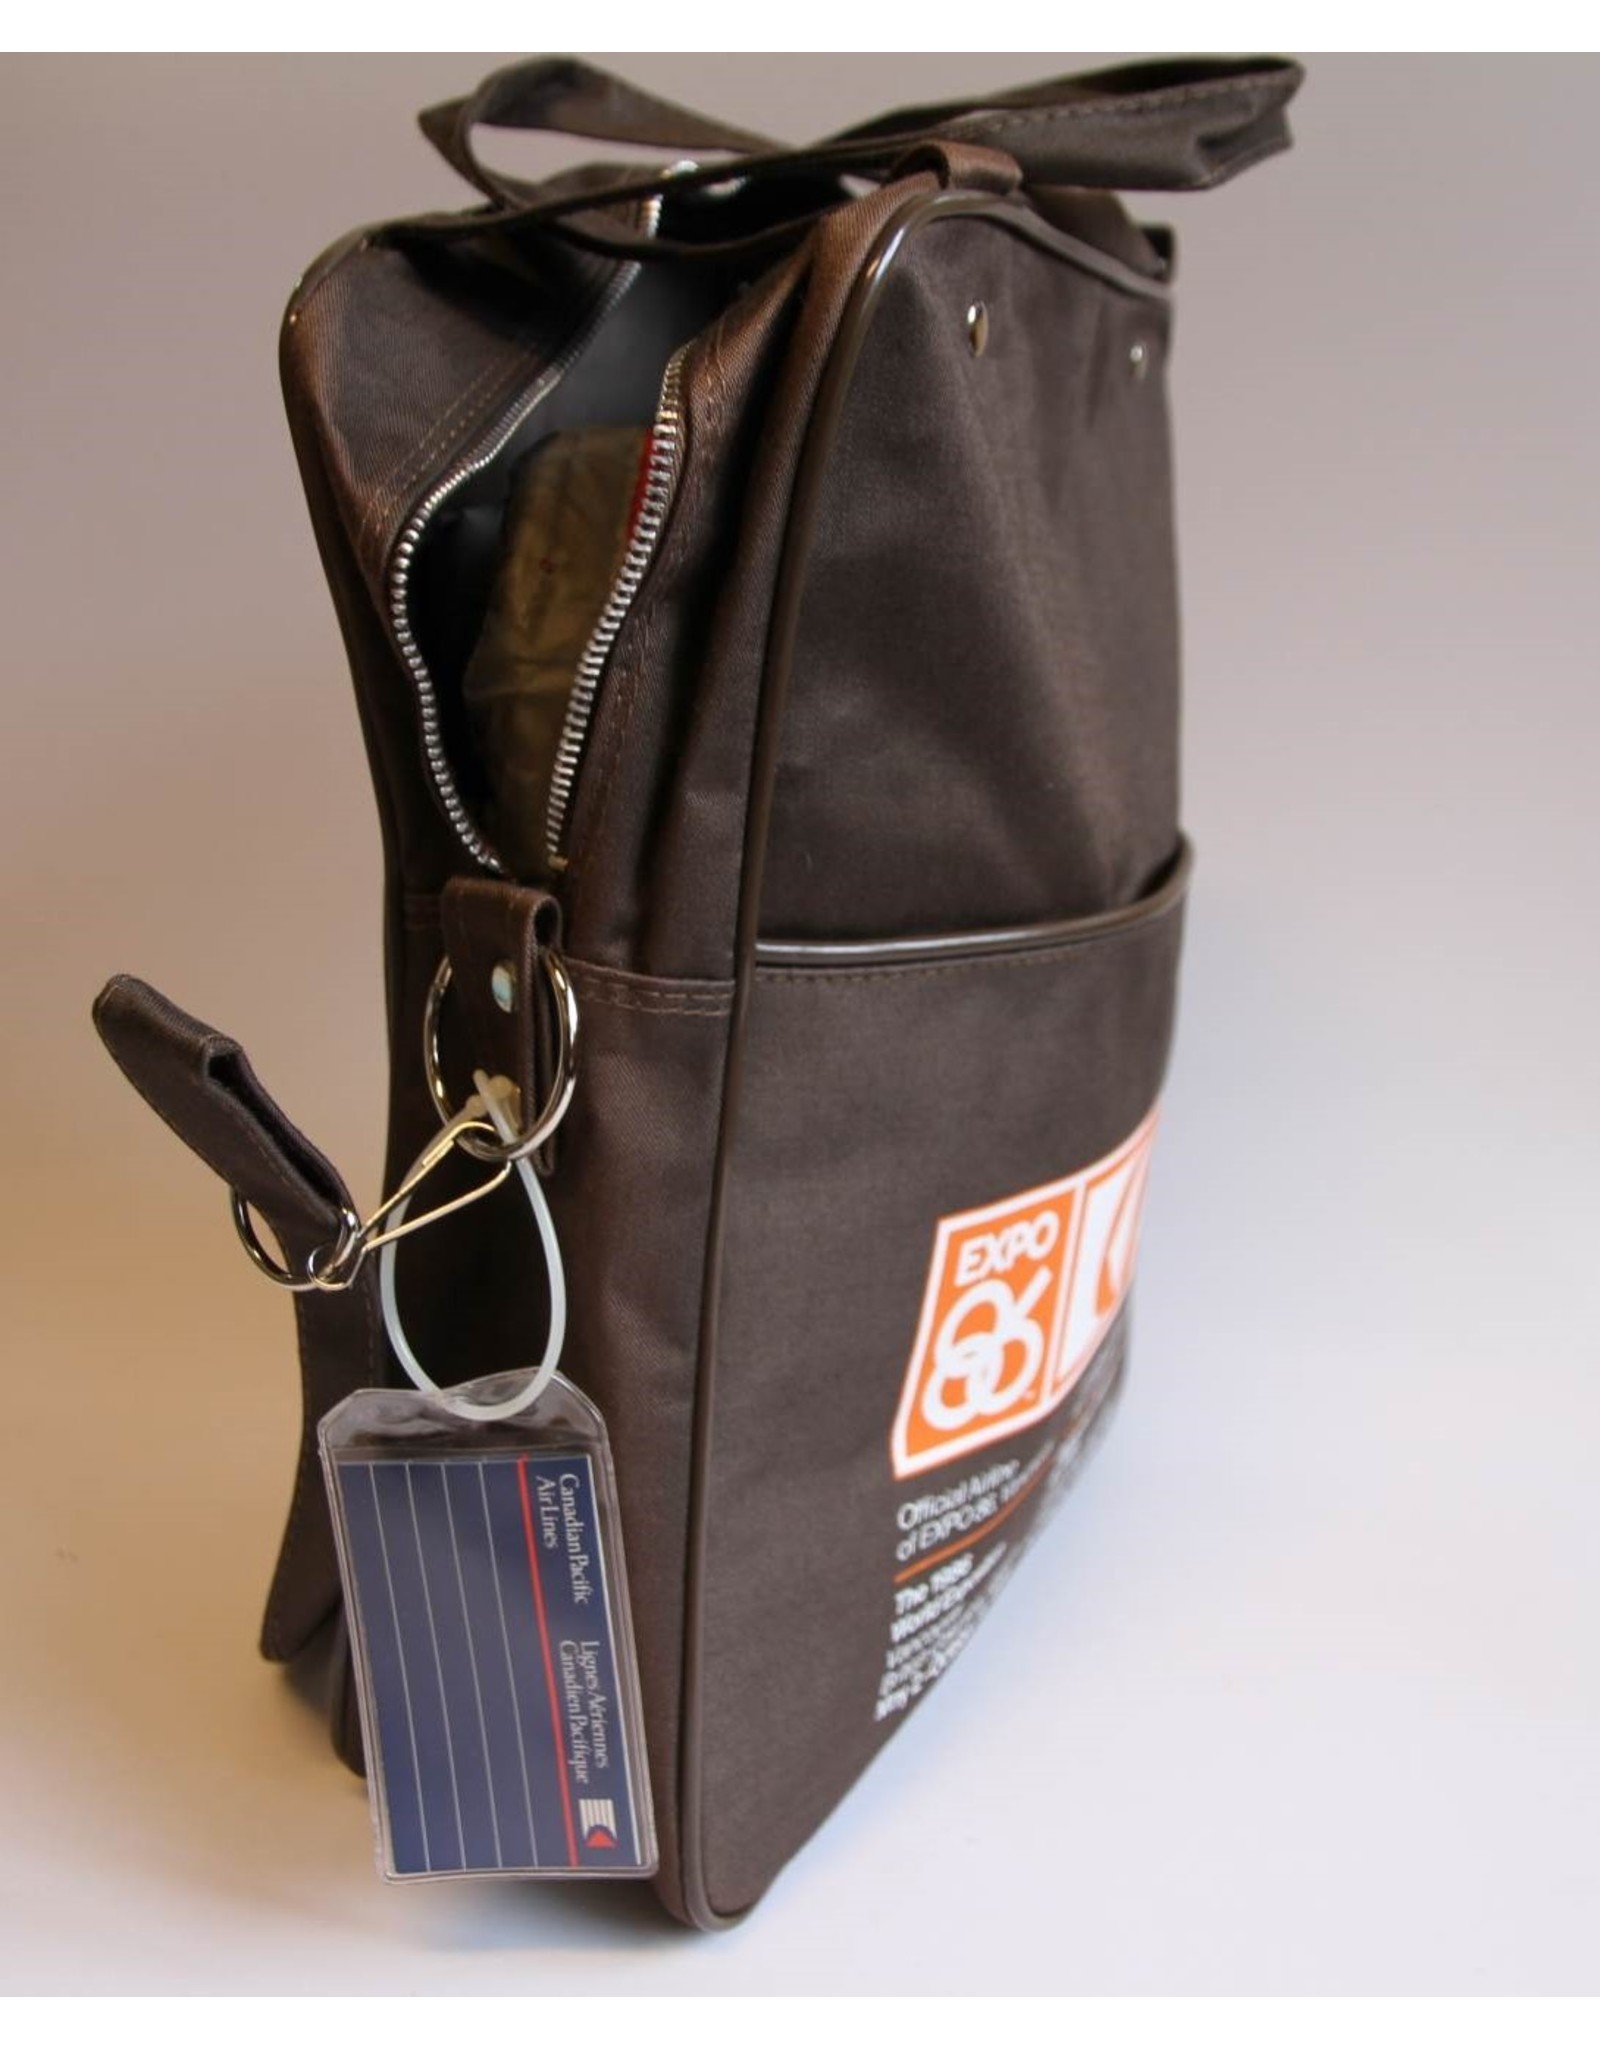 Bag - Canadian Pacific Air (CP Air) brown Expo 86 travel bag